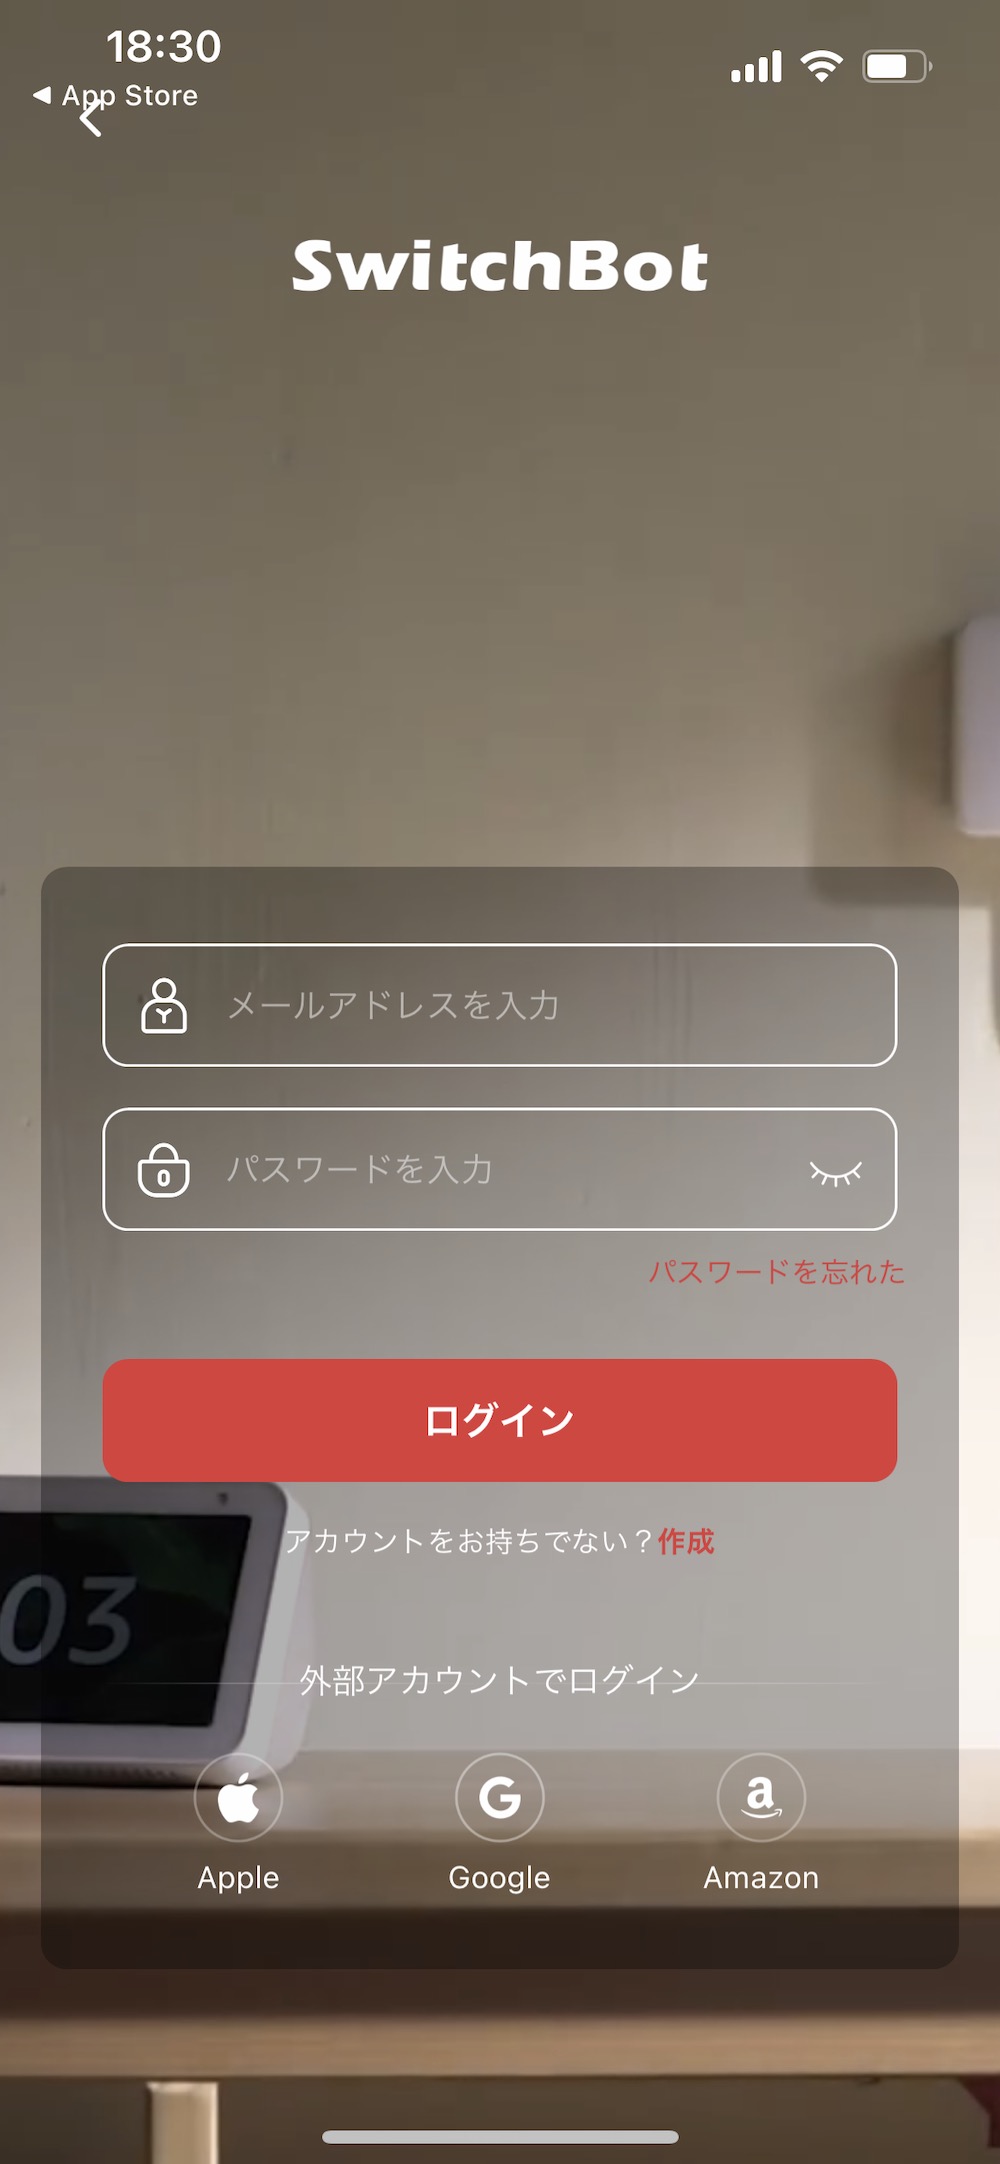 SwitchBot アカウントログイン画面